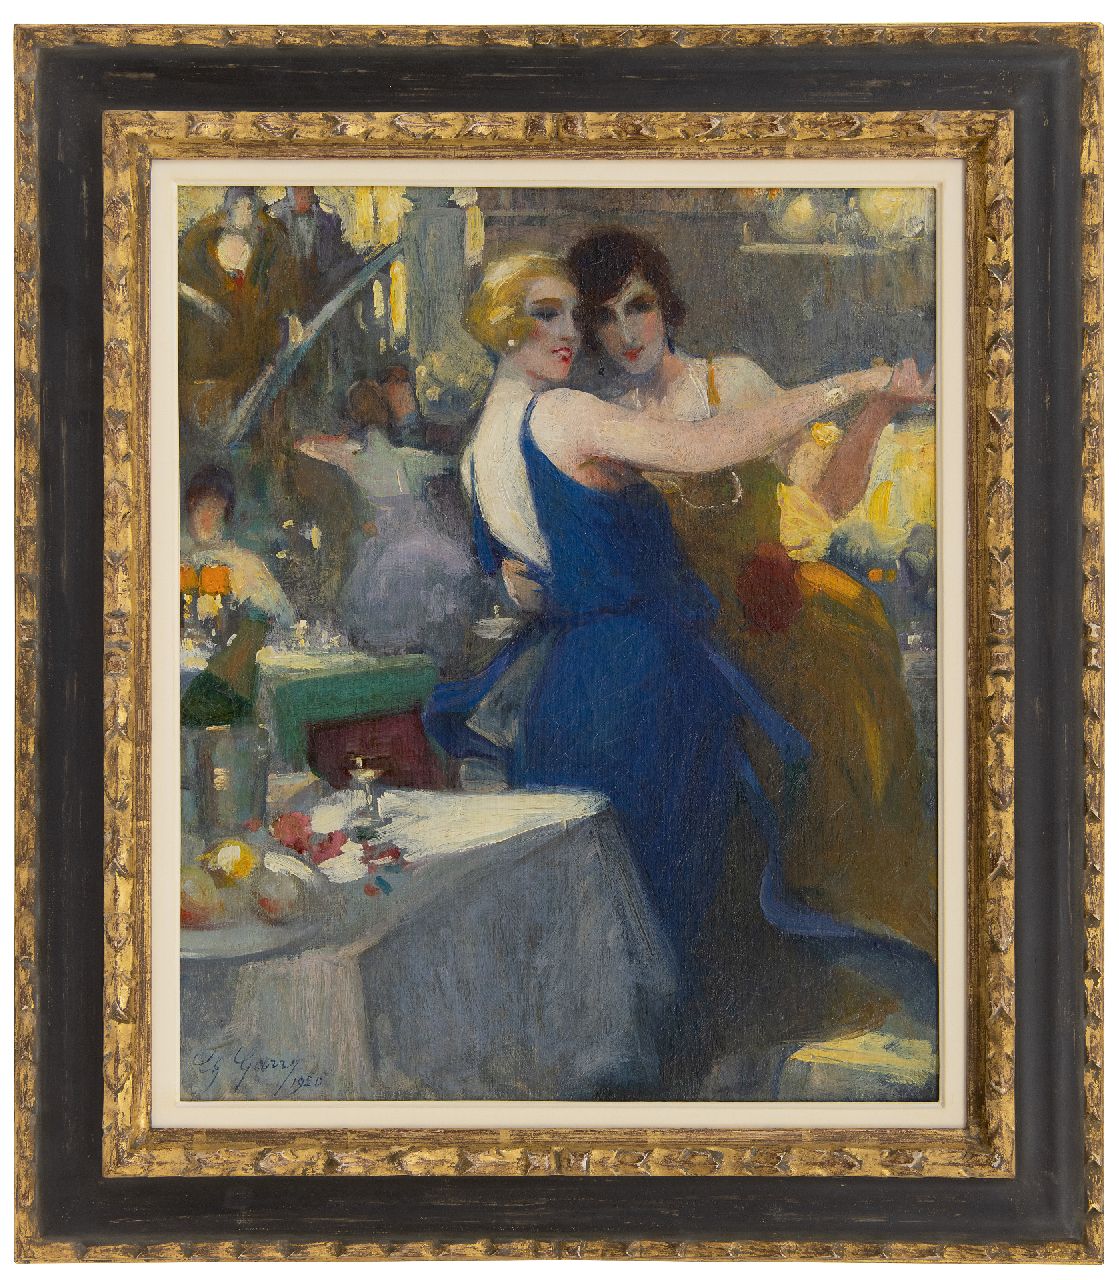 Garry C.  | Charley Garry, Twee dansende vrouwen, olieverf op doek 46,4 x 38,5 cm, gesigneerd linksonder en gedateerd 1920